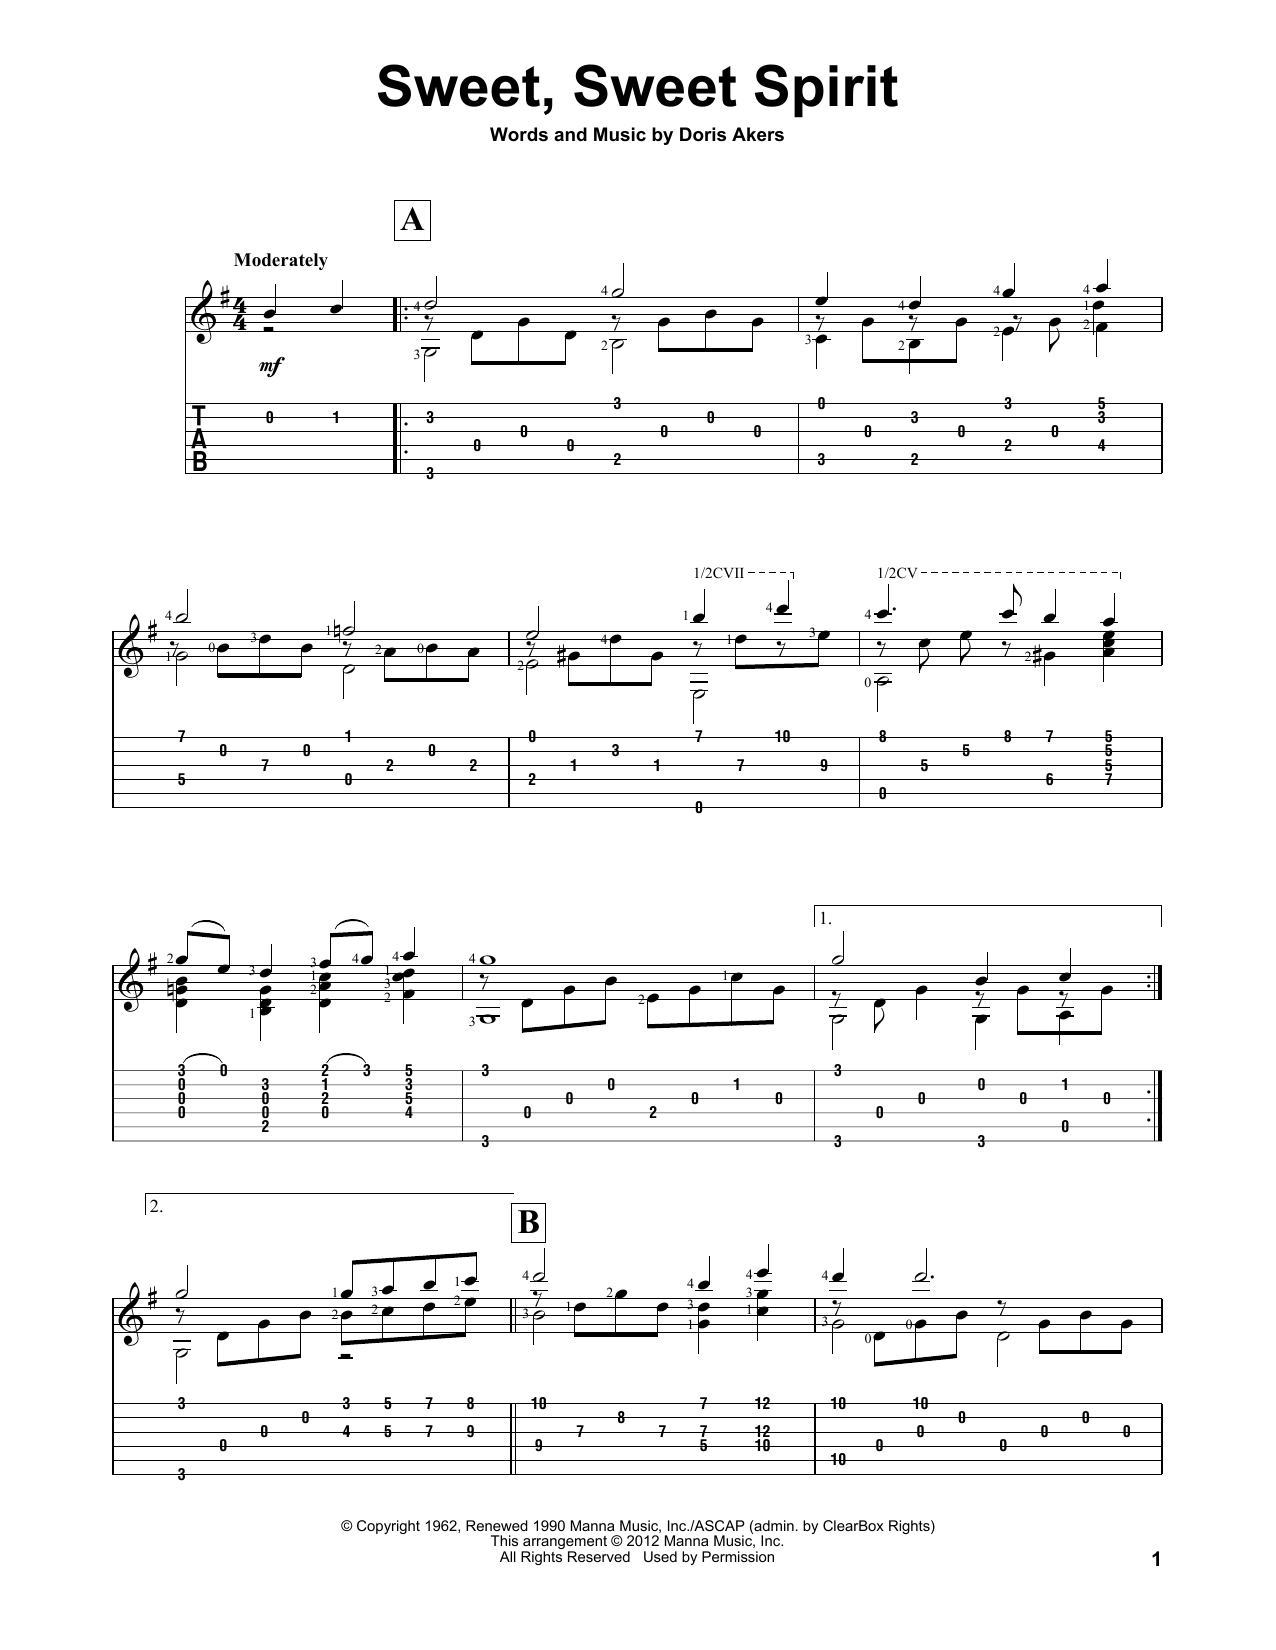 Doris Akers Sweet, Sweet Spirit Sheet Music Notes & Chords for Solo Guitar - Download or Print PDF